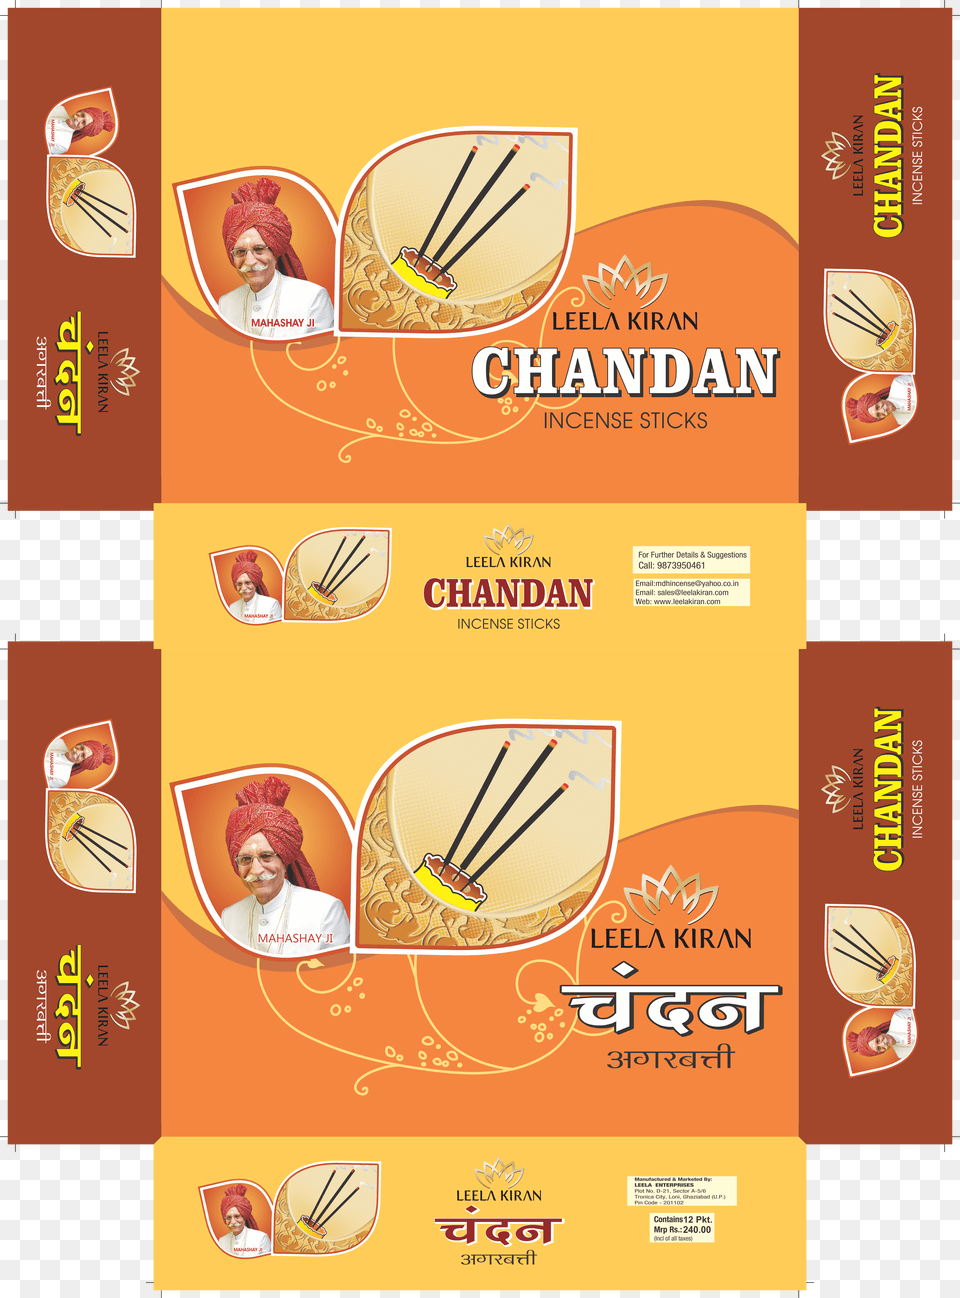 Saffron Suppliers In India Saffron Suppliers Incense Flyer Png